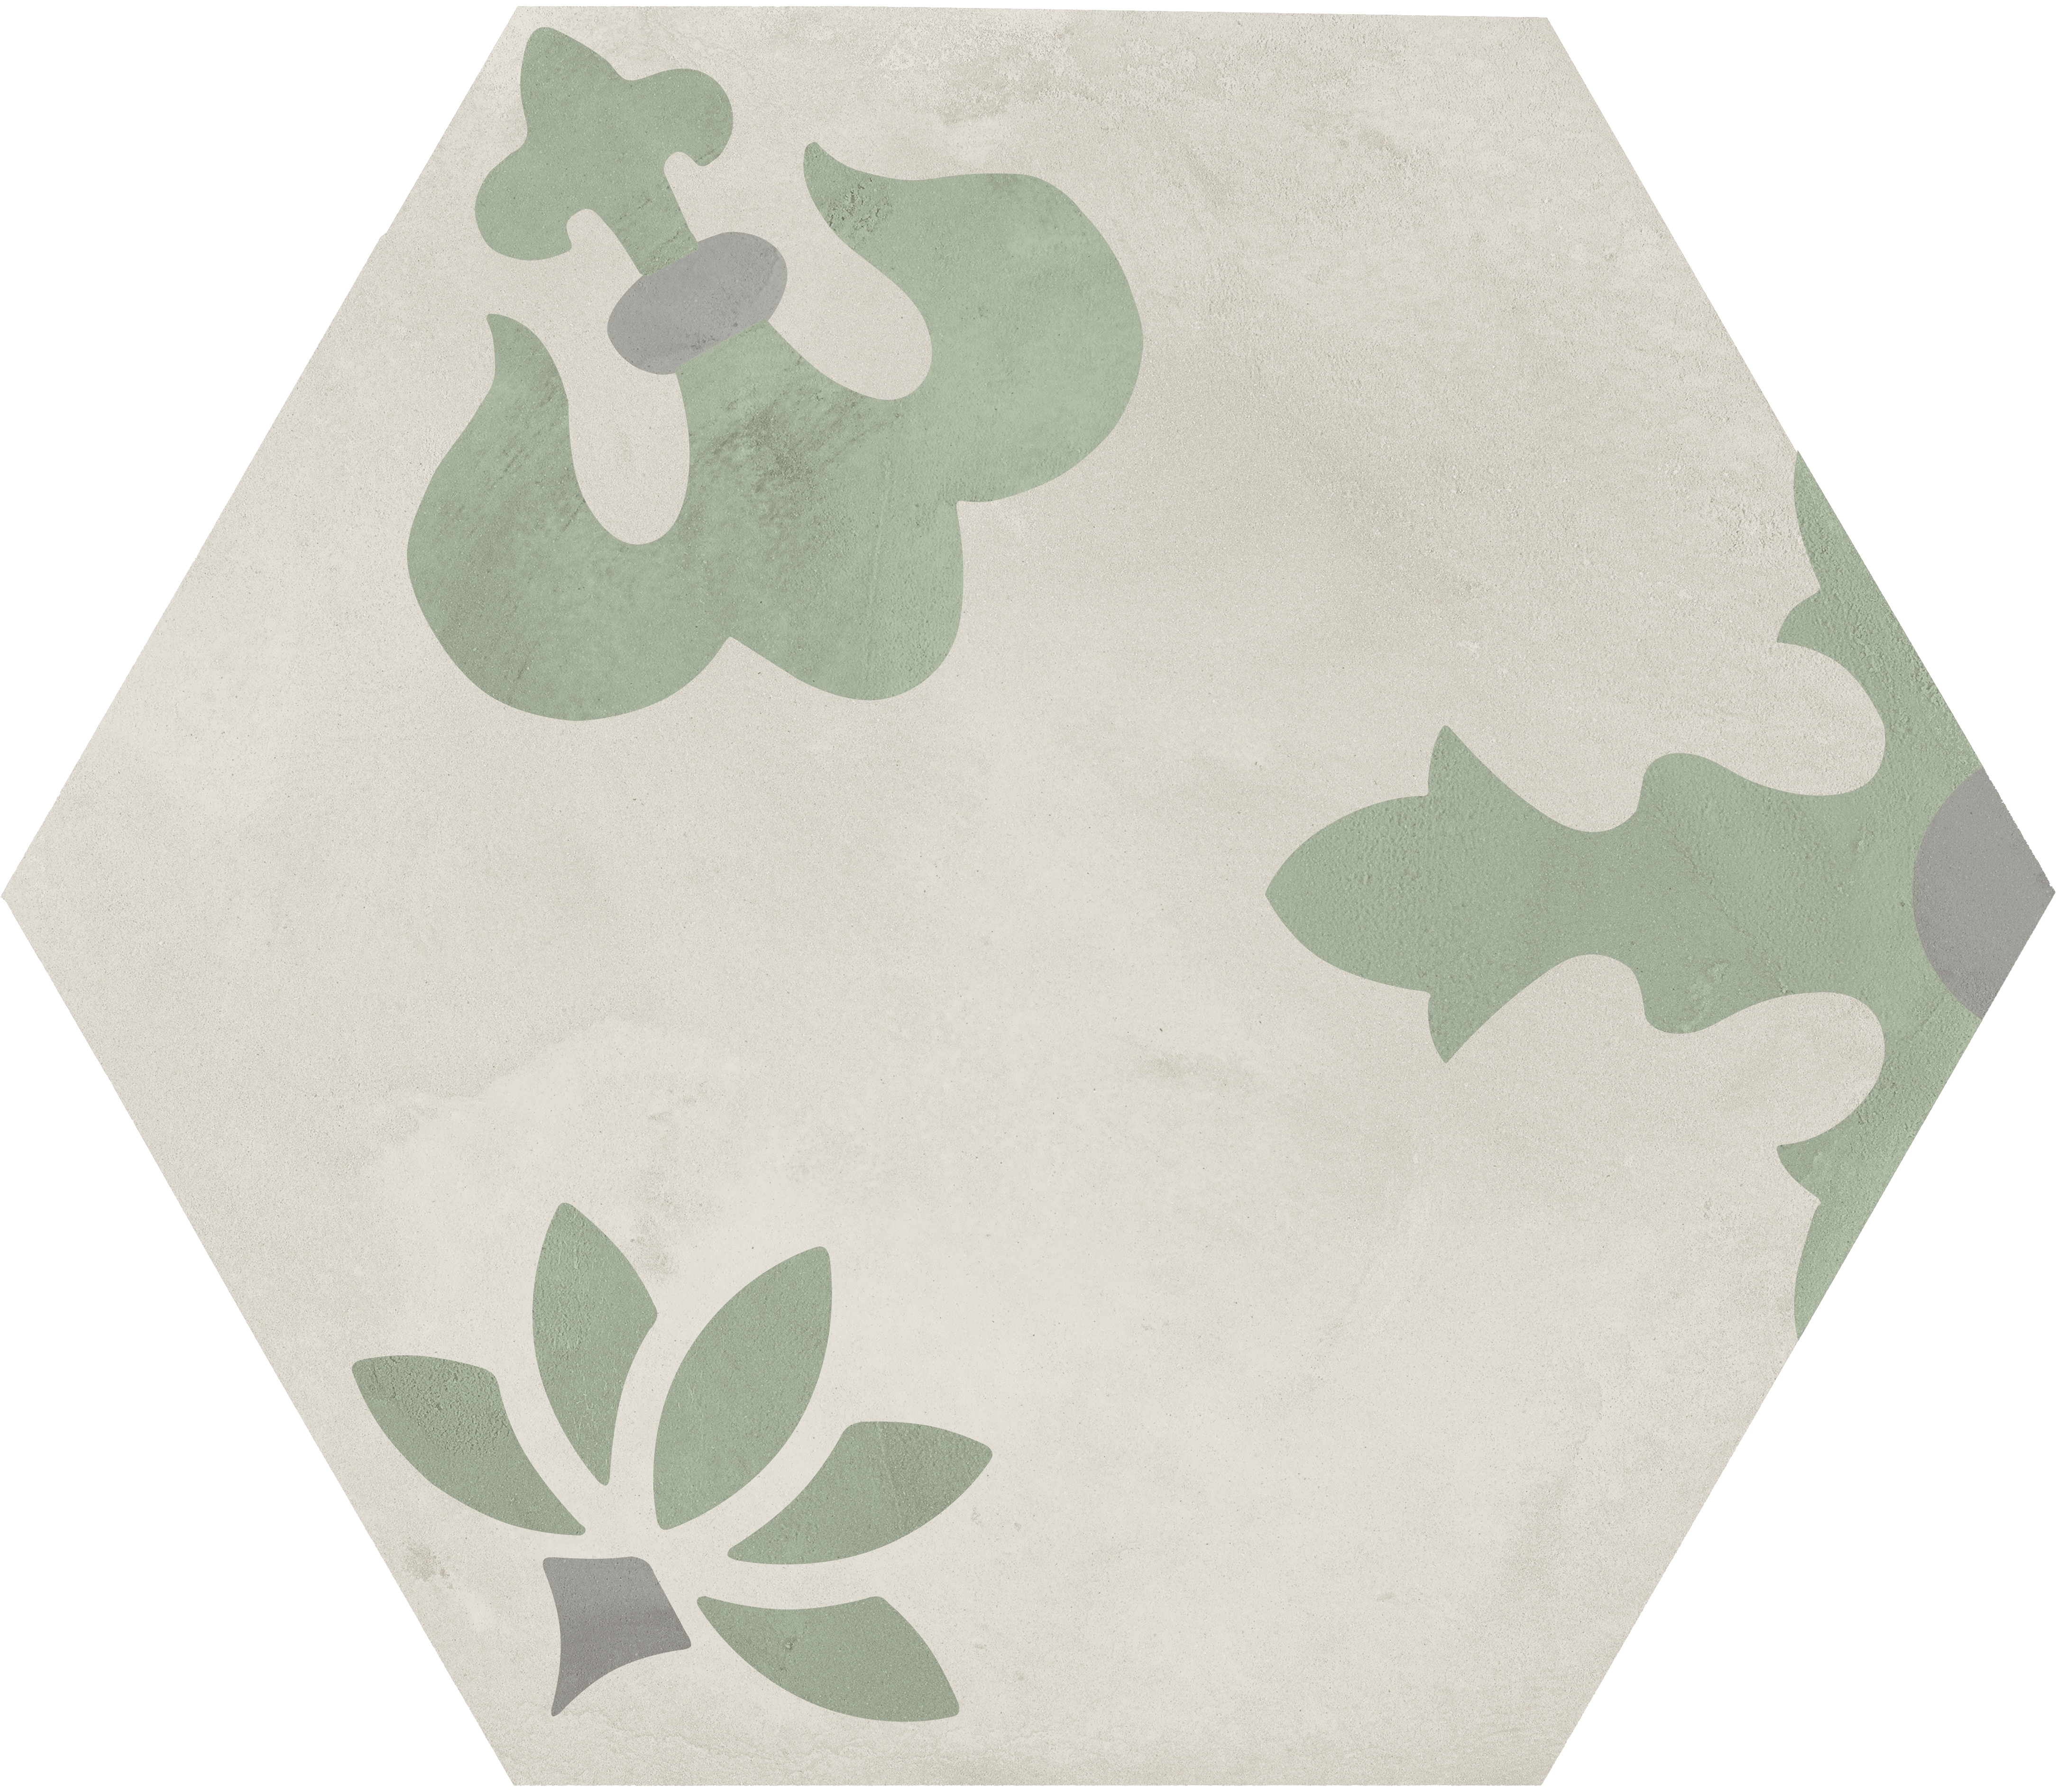 Marcacorona Sabbia – Menta Naturale – Matt Sabbia – Menta I417 matt natur 21,6x25cm Giglio Esagona 9mm